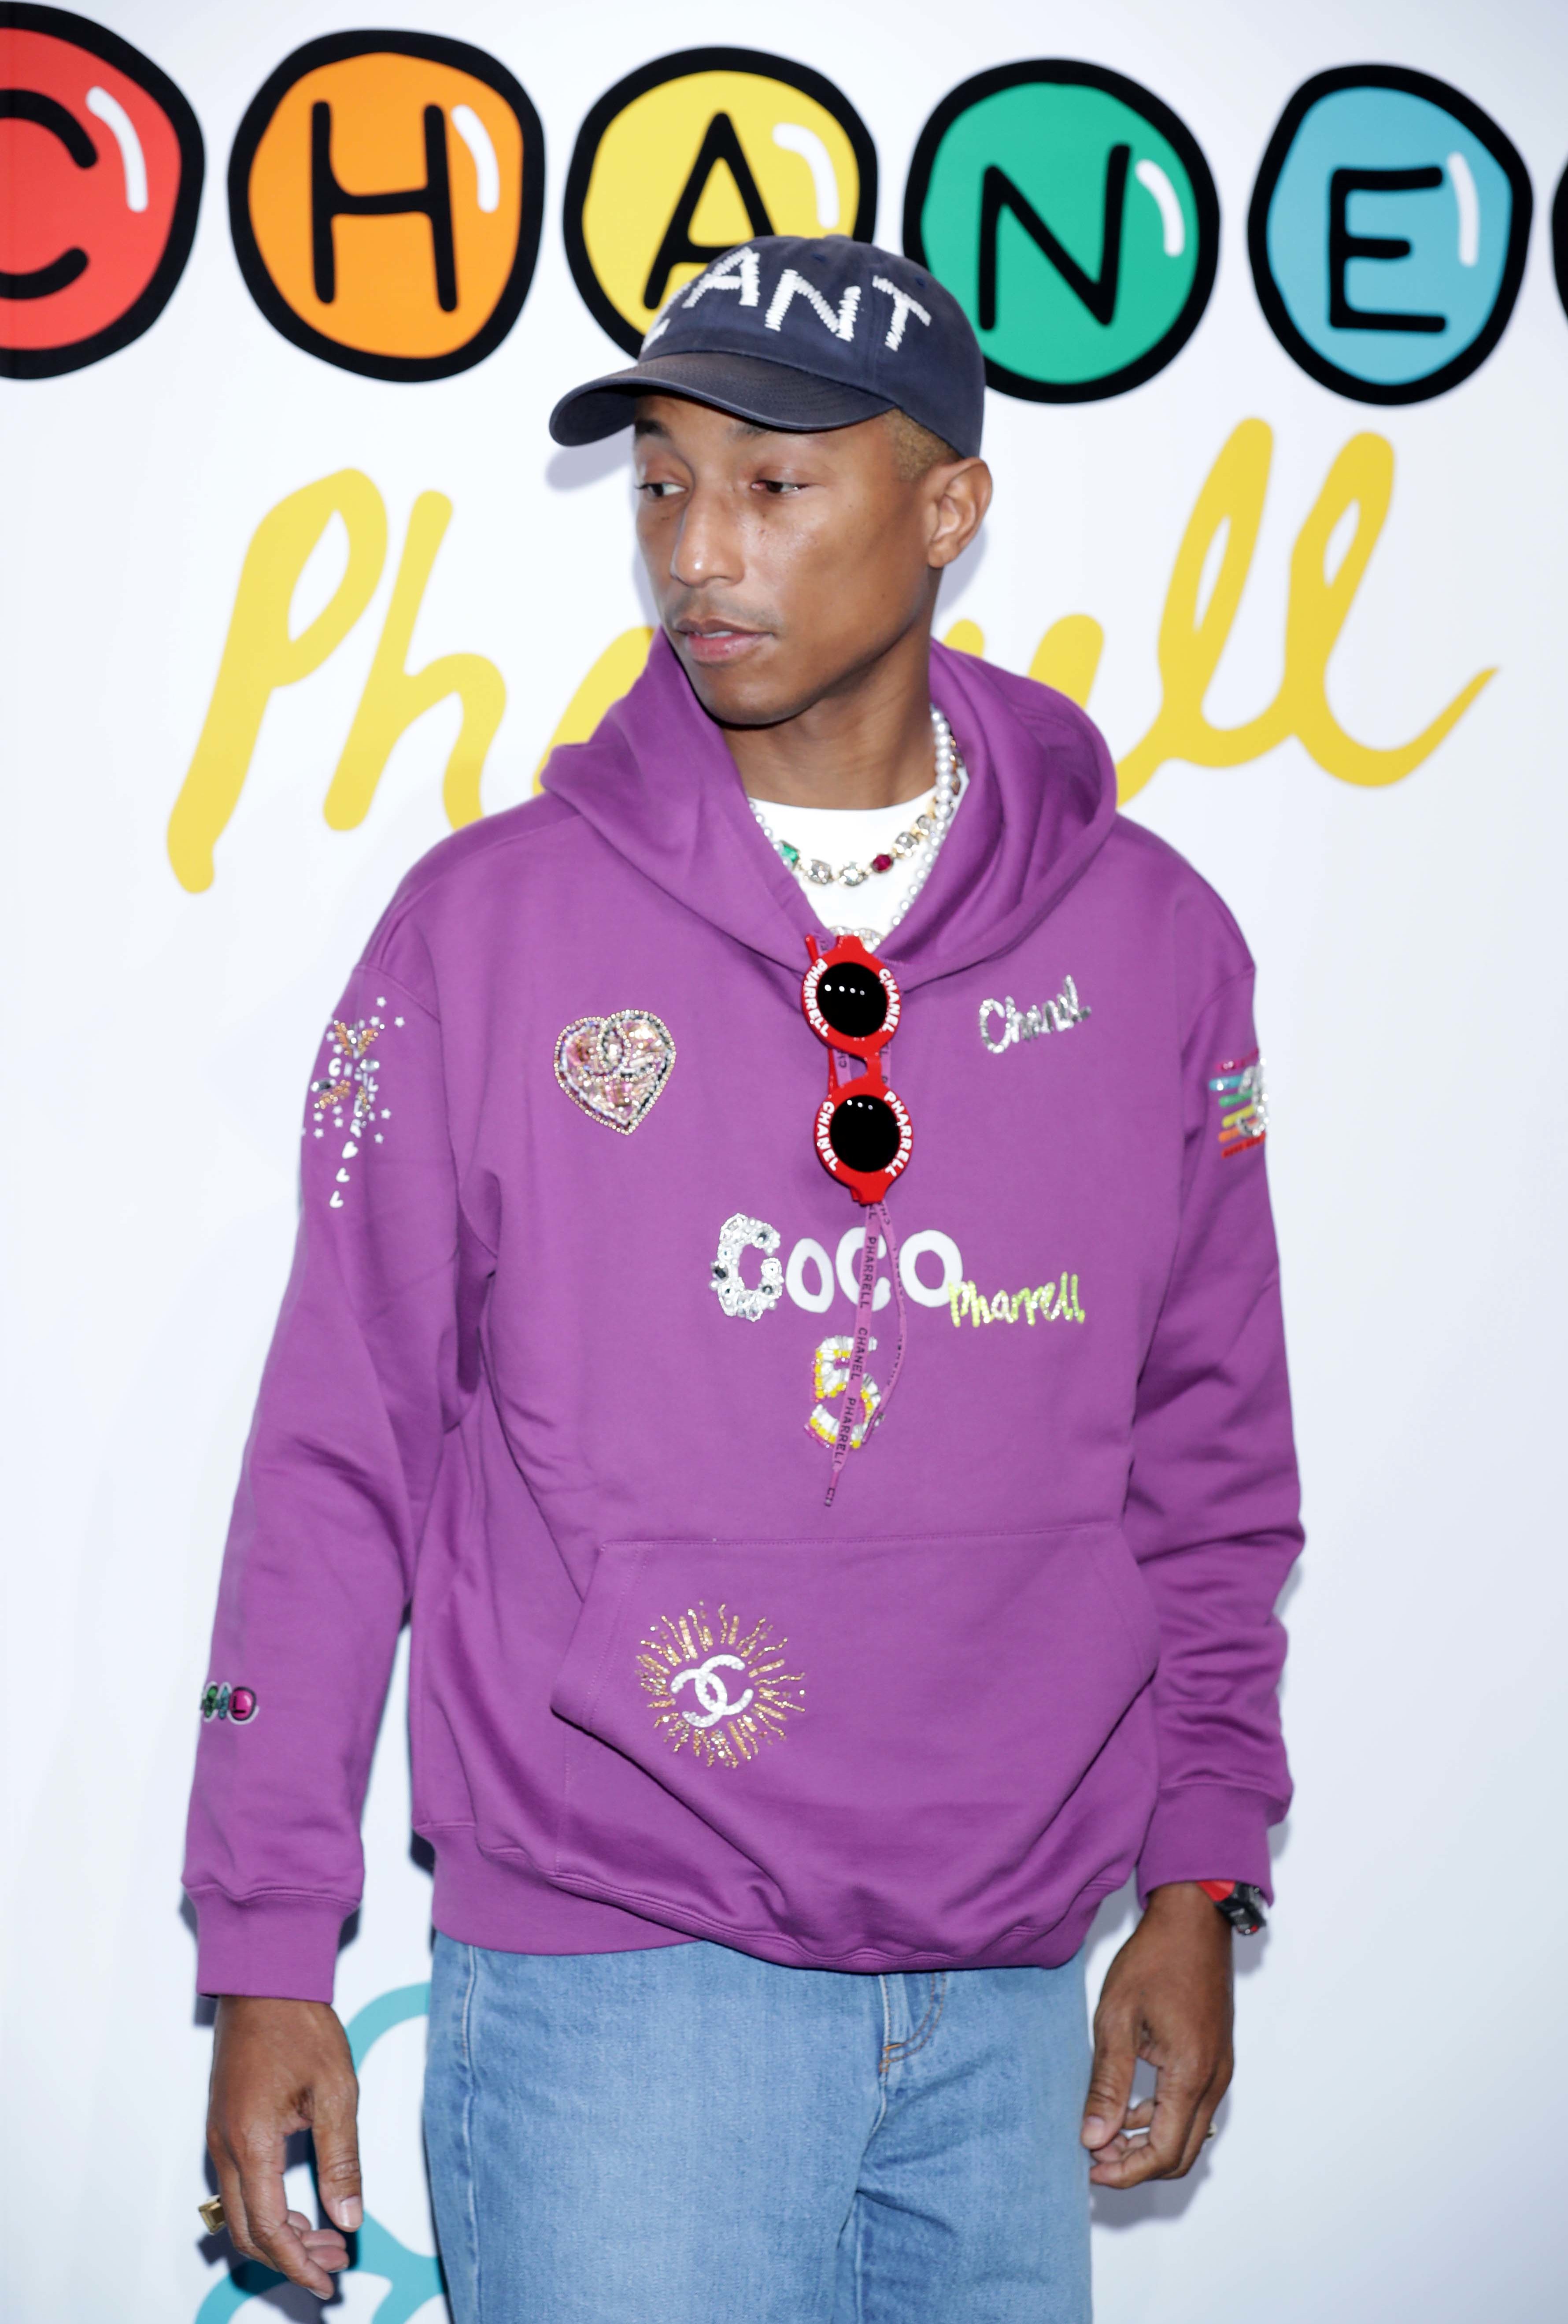 Chanel Pharrell